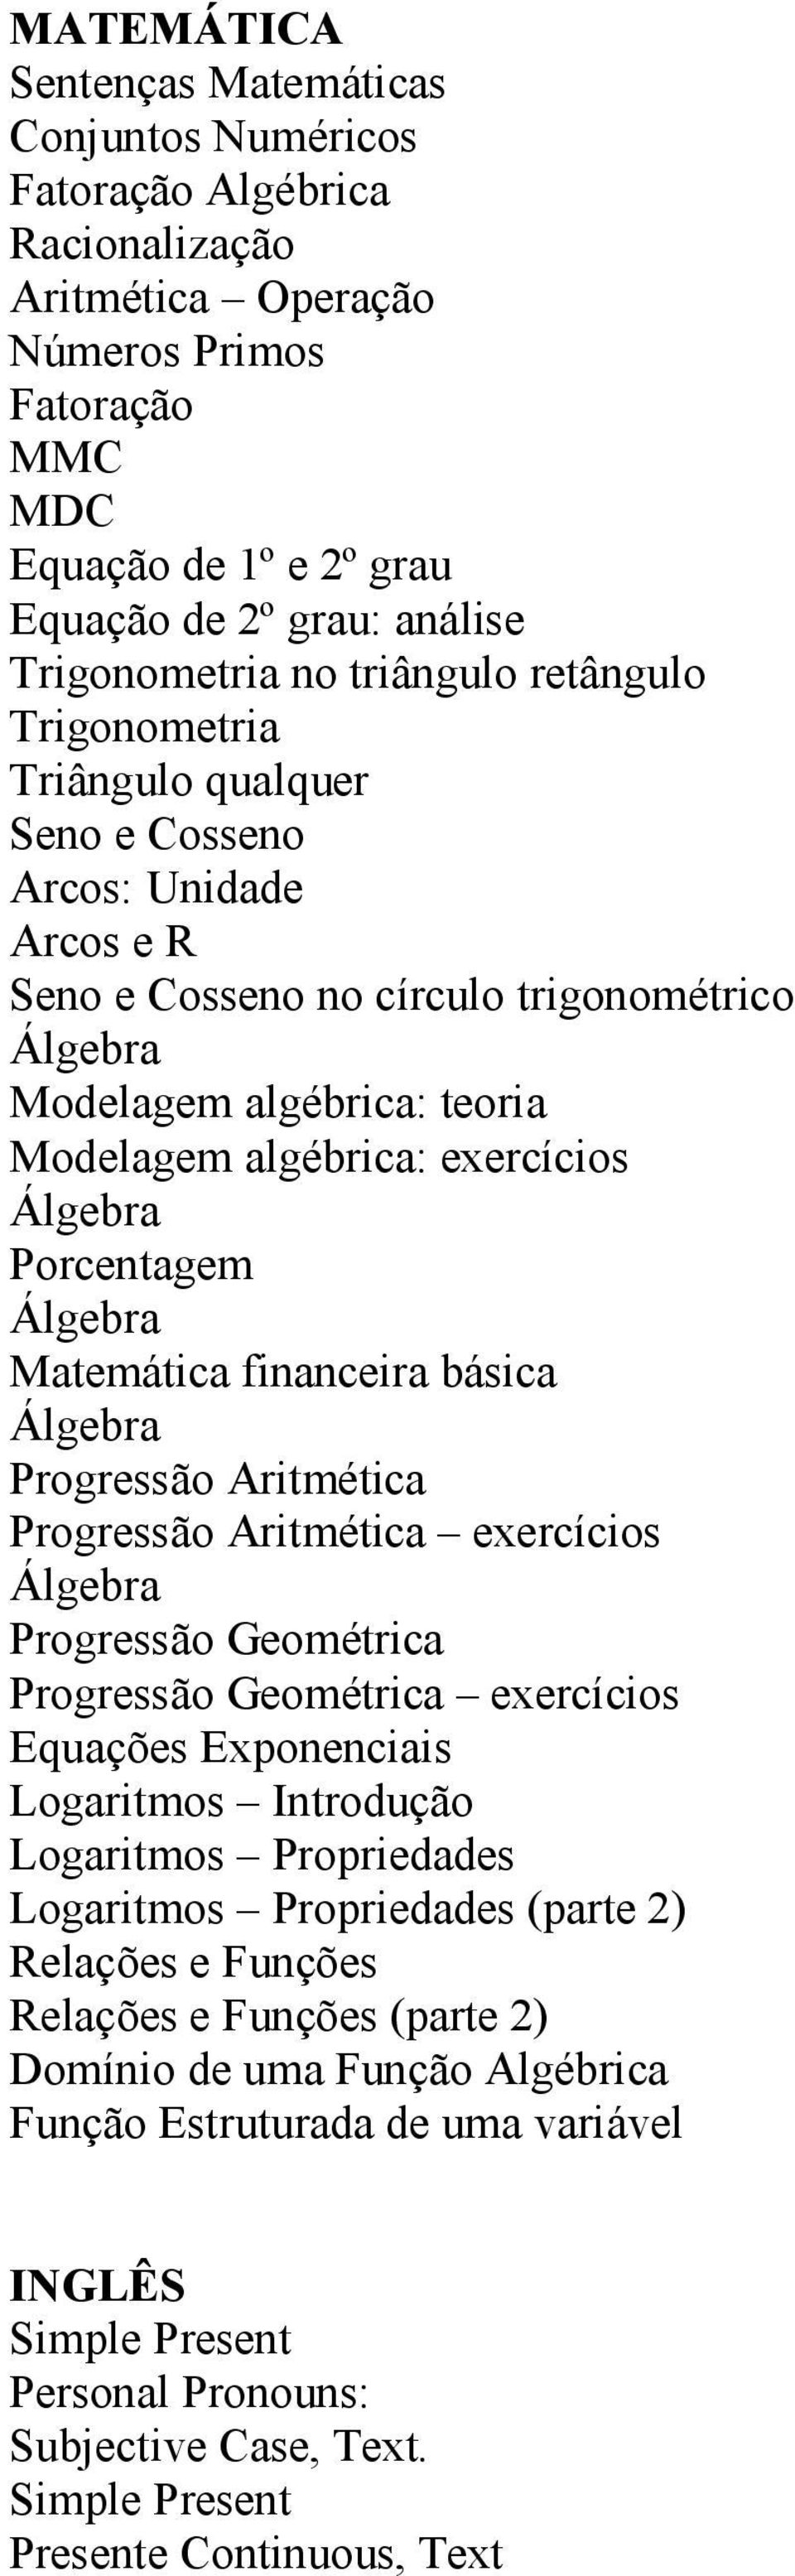 algébrica: exercícios Álgebra Porcentagem Álgebra Matemática financeira básica Álgebra Progressão Aritmética Progressão Aritmética exercícios Álgebra Progressão Geométrica Progressão Geométrica